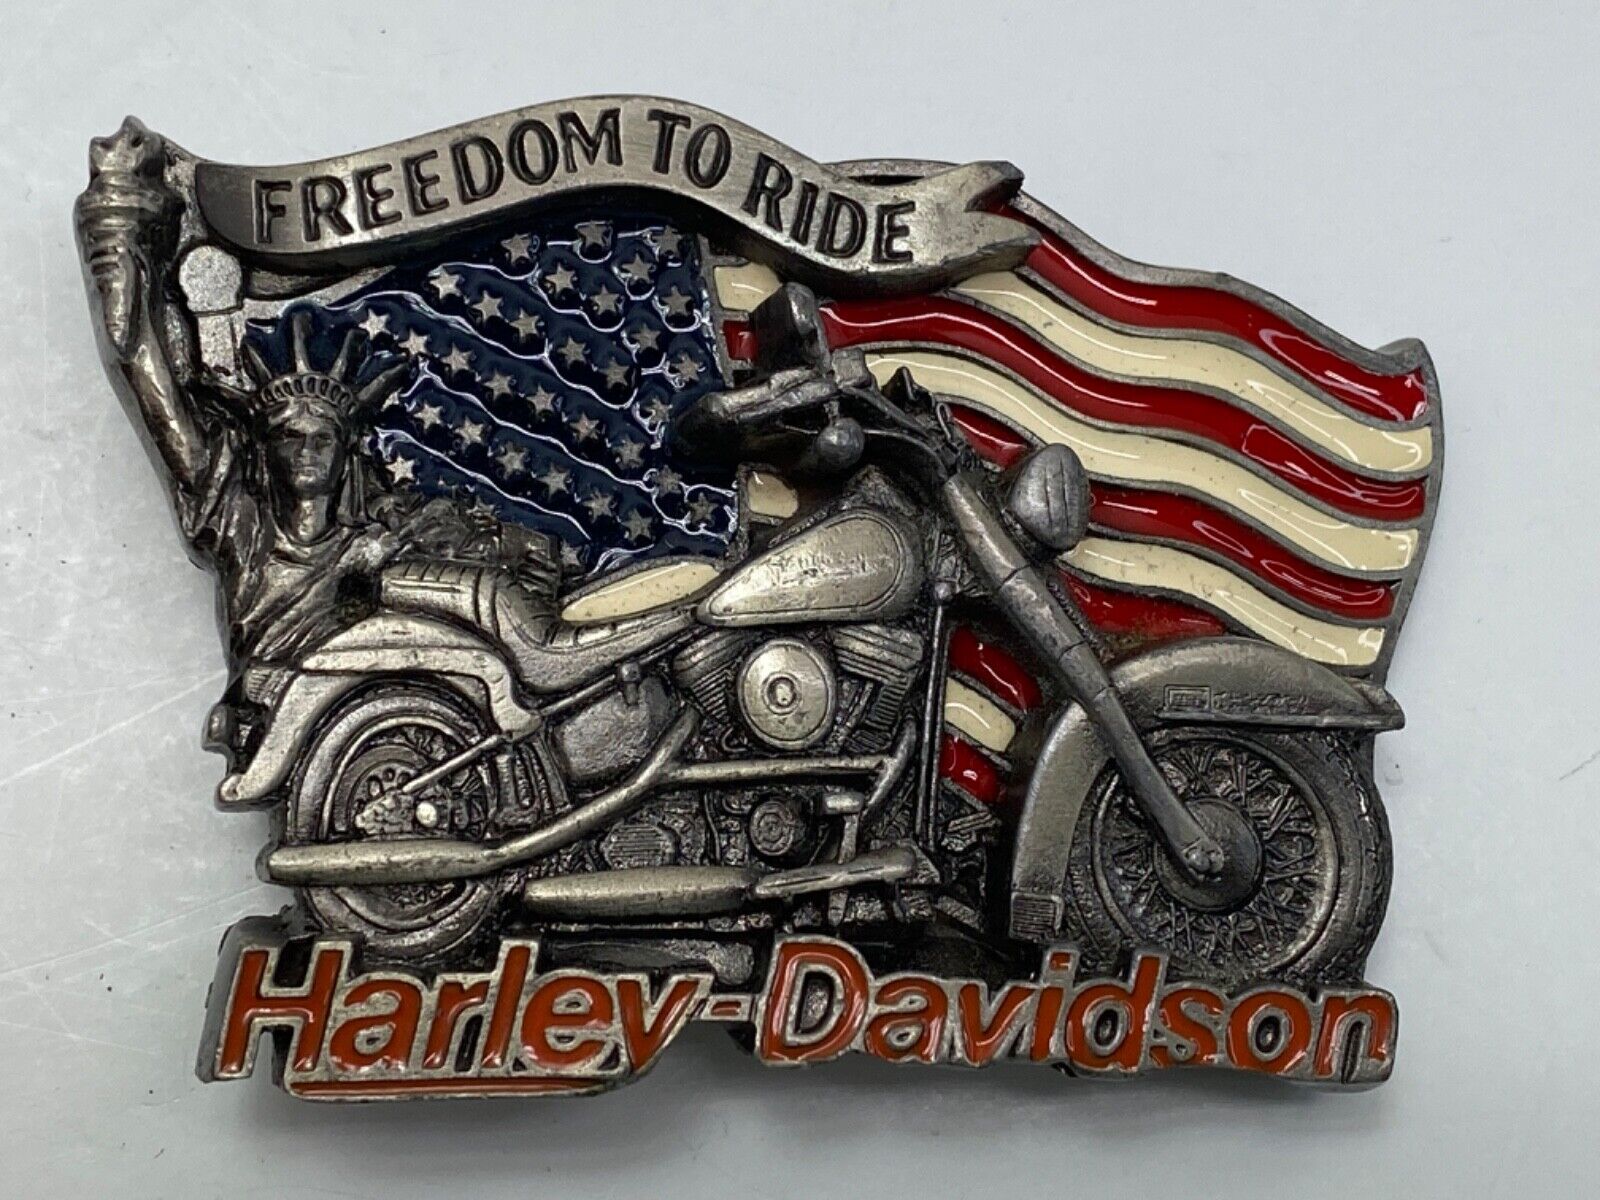 HARLEY DAVIDSON VINTAGE 1991 freedom to ride American flag BELT BUCKLE motorcycl